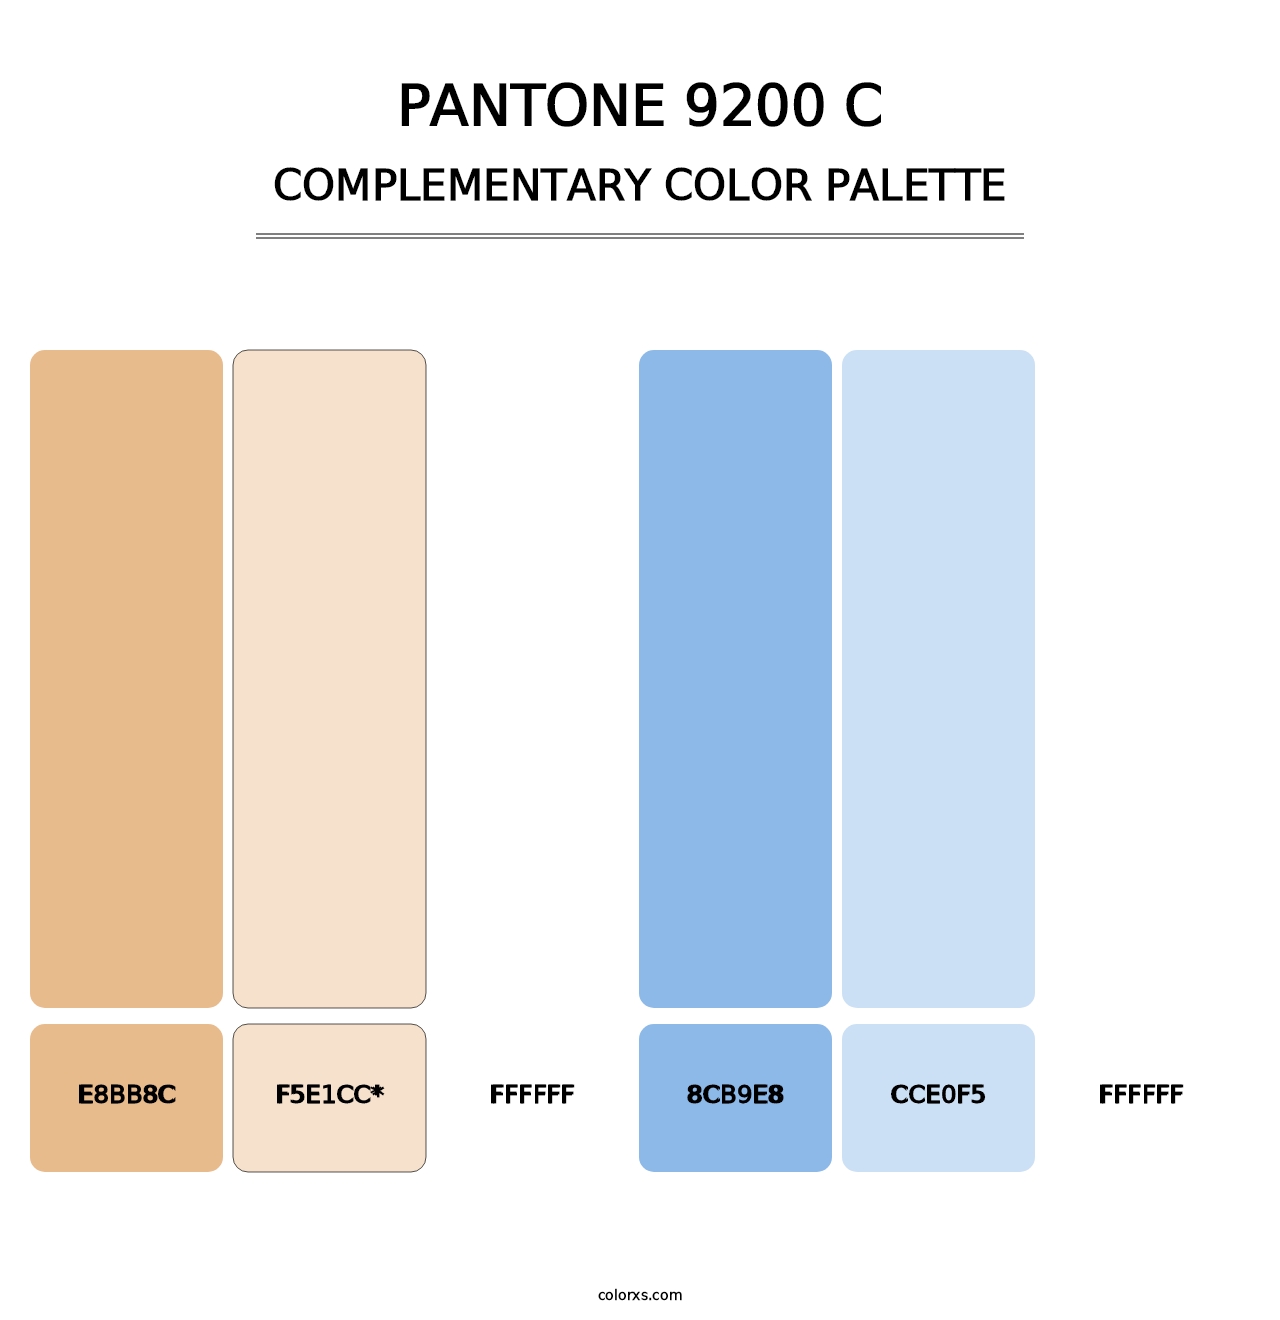 PANTONE 9200 C - Complementary Color Palette